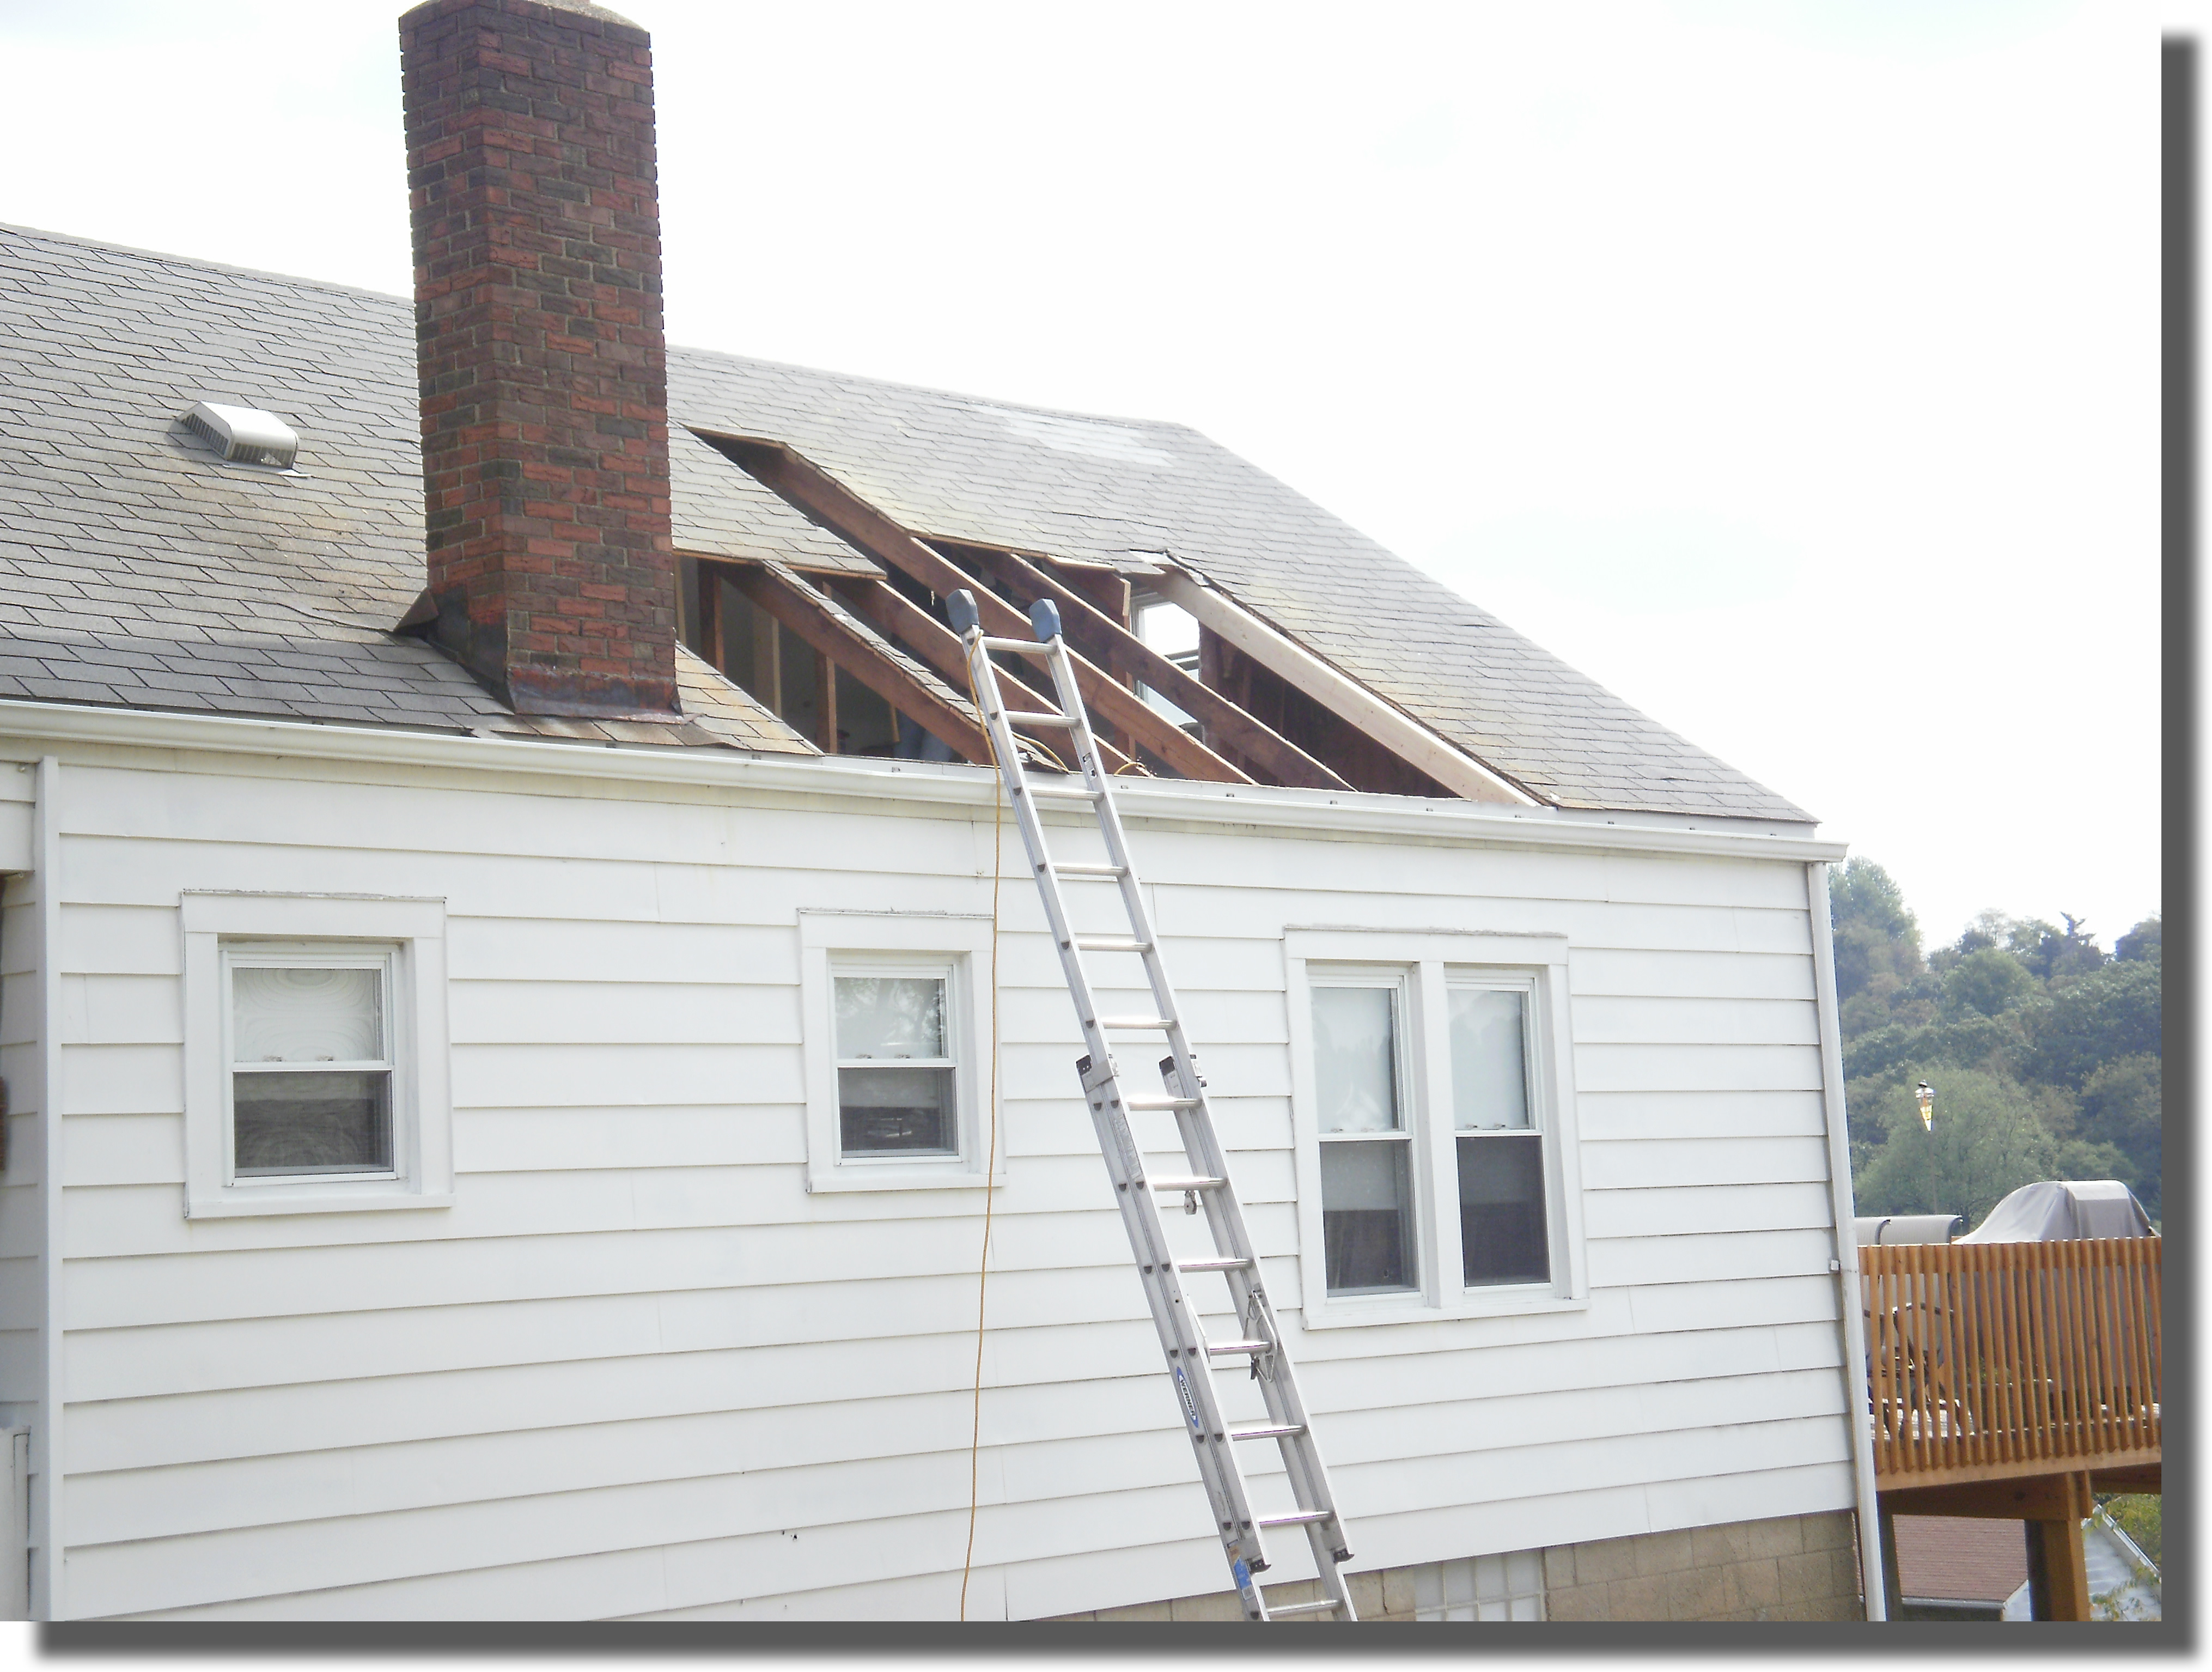 Roof During demolition